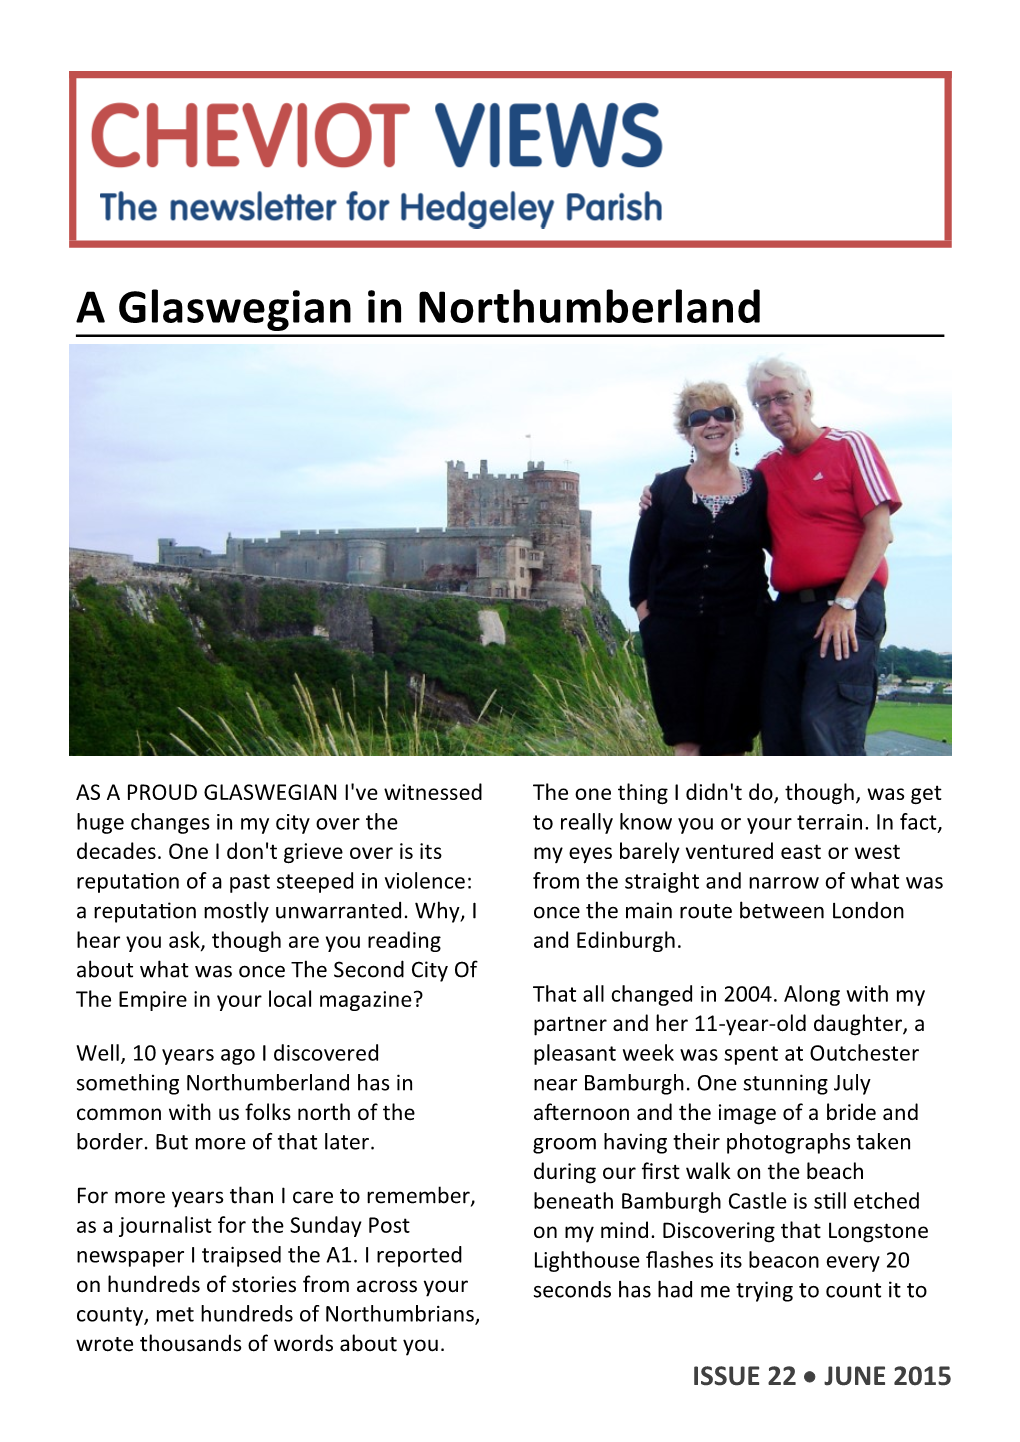 A Glaswegian in Northumberland